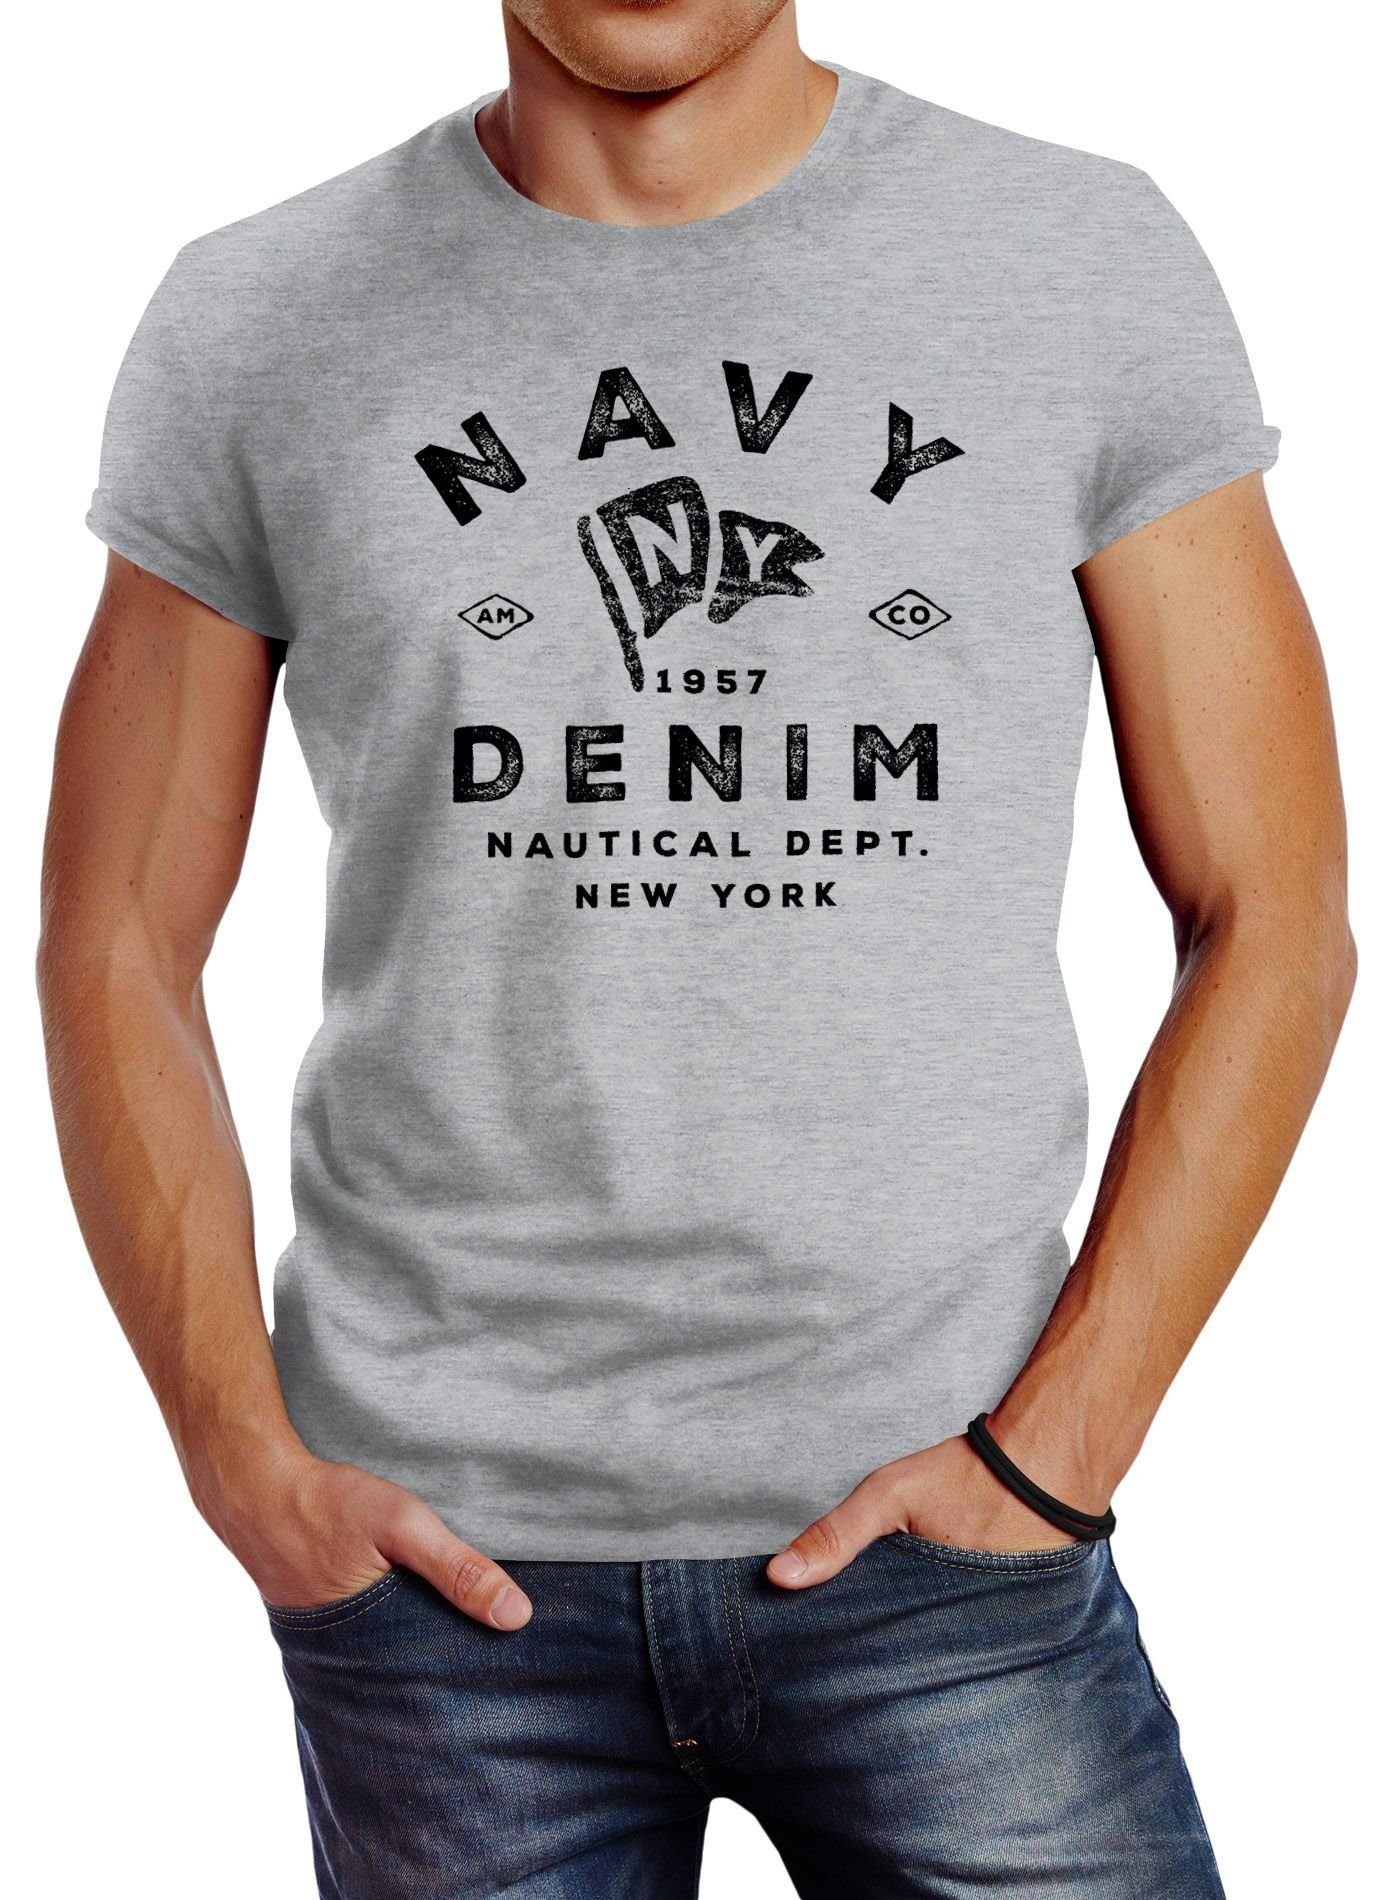 Neverless Print-Shirt Herren T-Shirt Vintage Motiv Schriftzug Navy Denim Nautical New York Neverless® mit Print grau